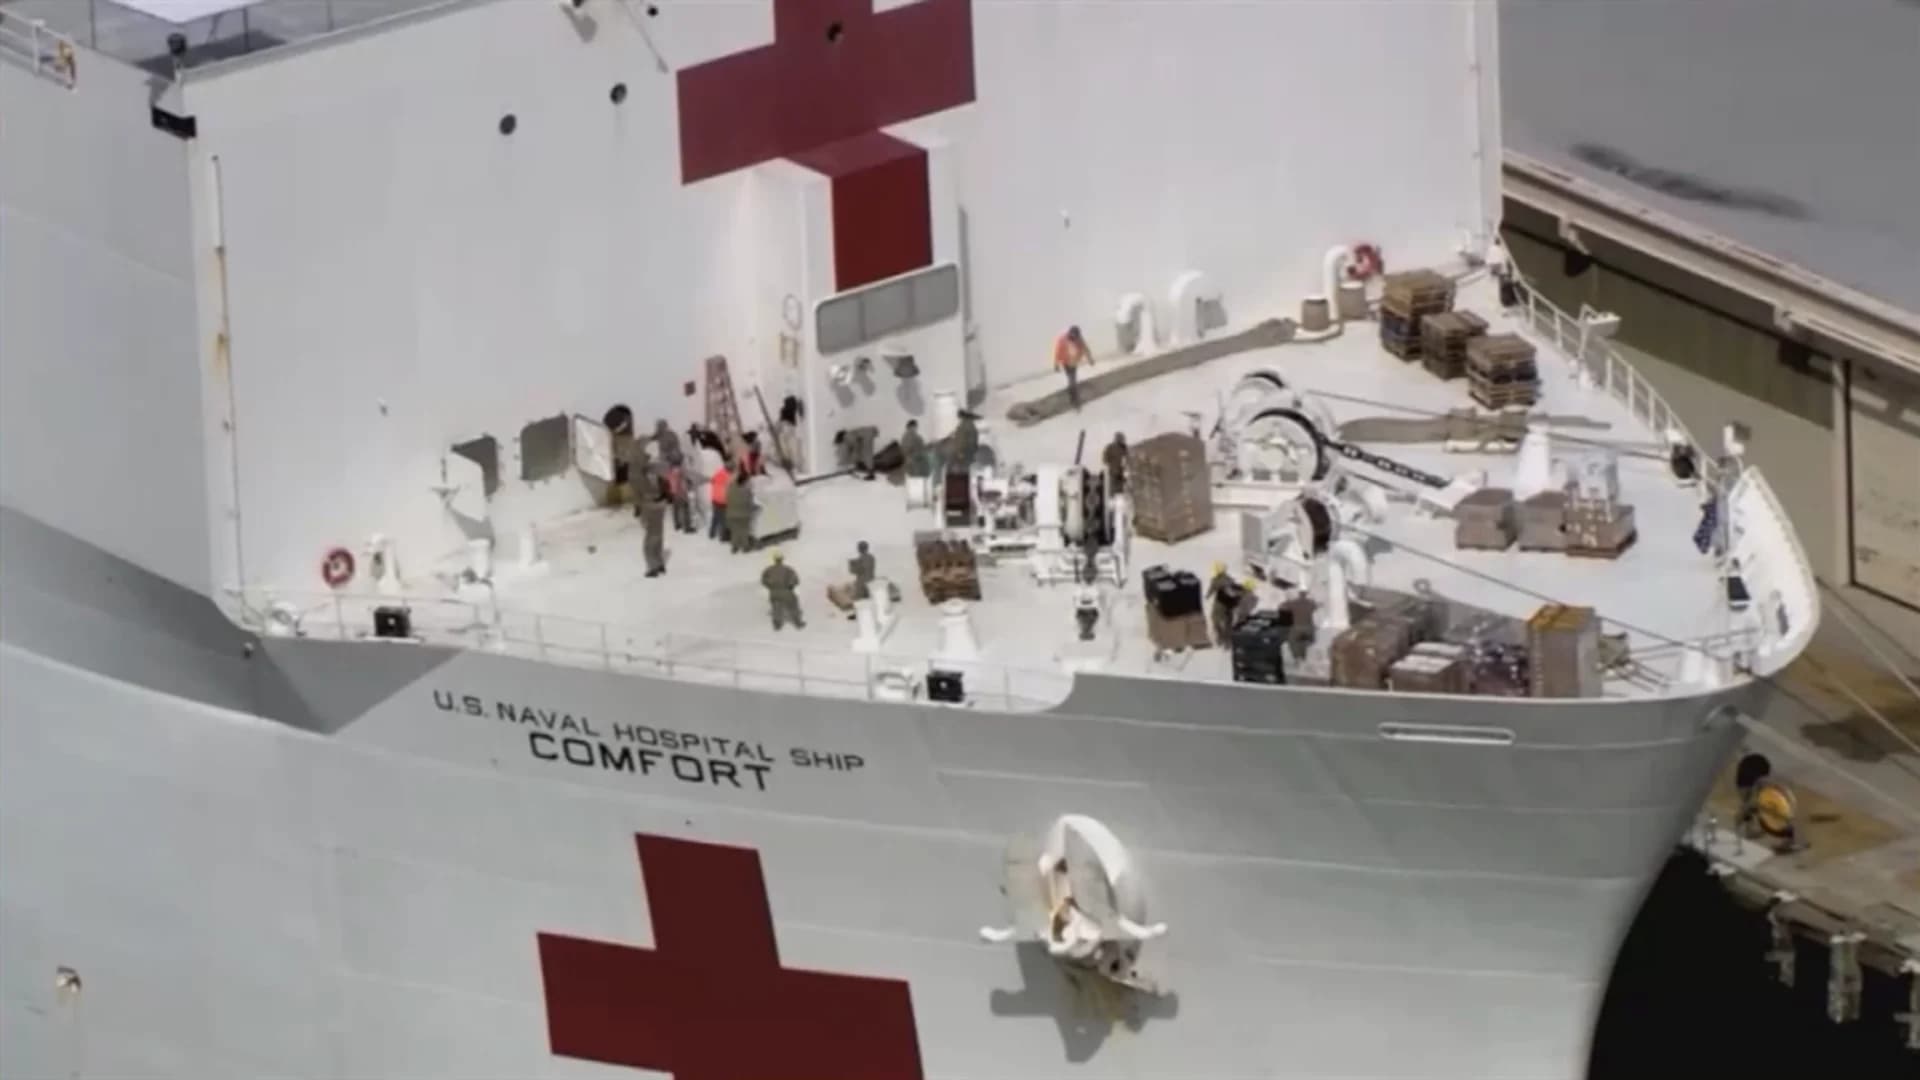 President Trump attends sendoff for NY-bound Navy hospital ship Comfort